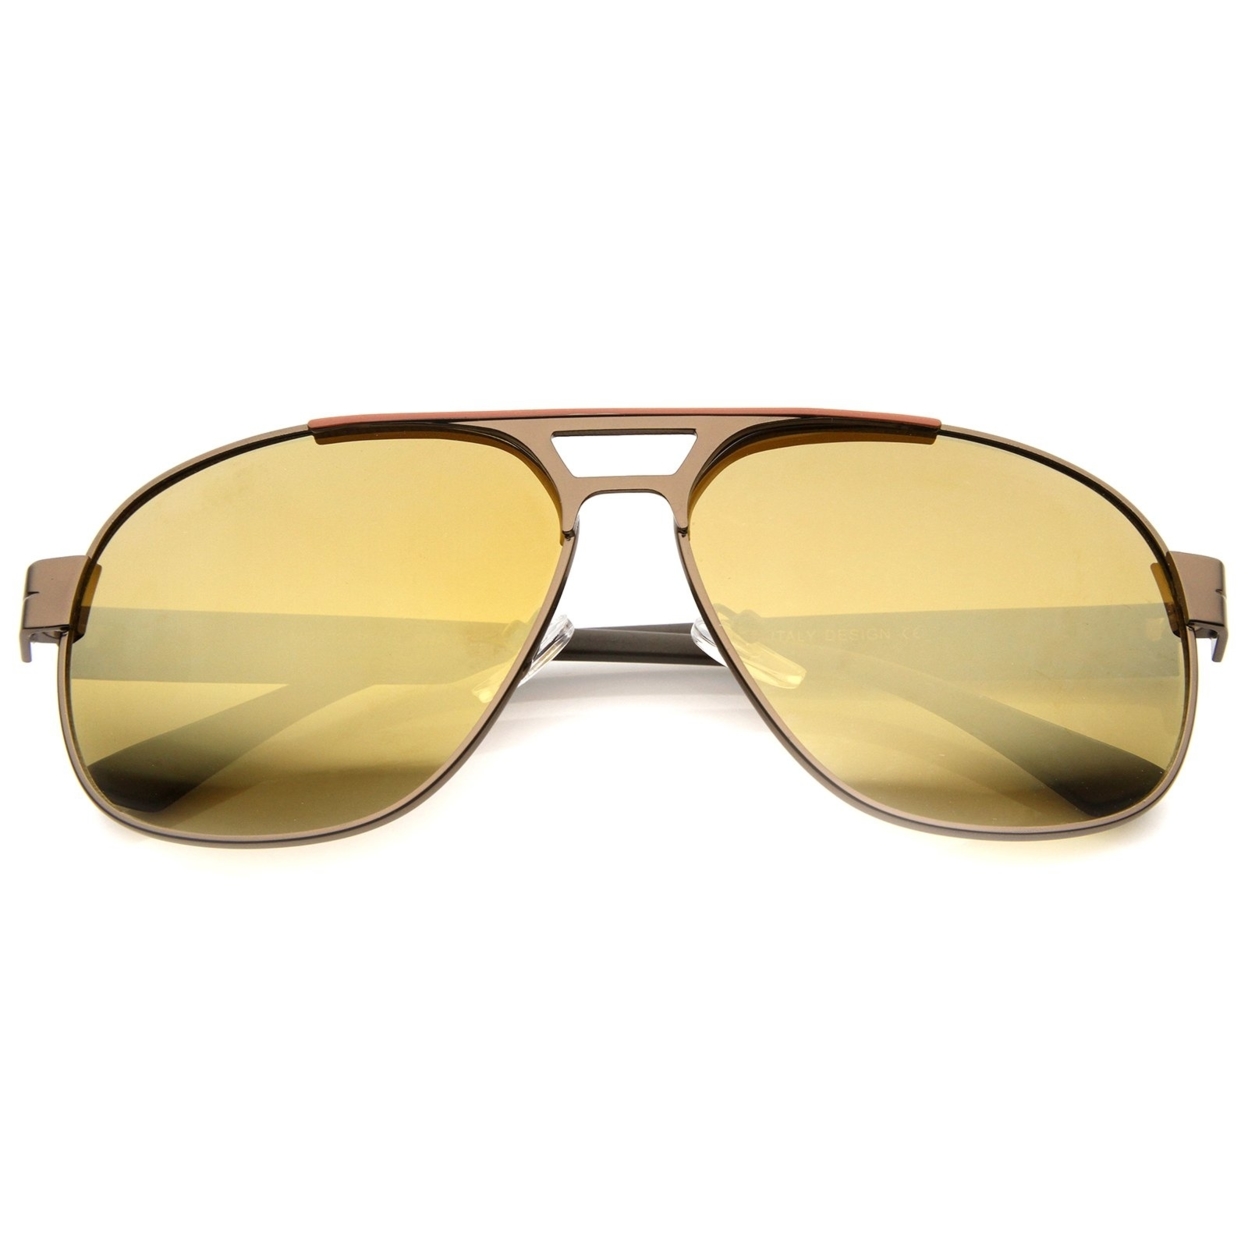 Modern Flat Top Crossbar Mirror Lens Metal Square Aviator Sunglasses 59mm - Silver-Shiny Black / Silver Mirror